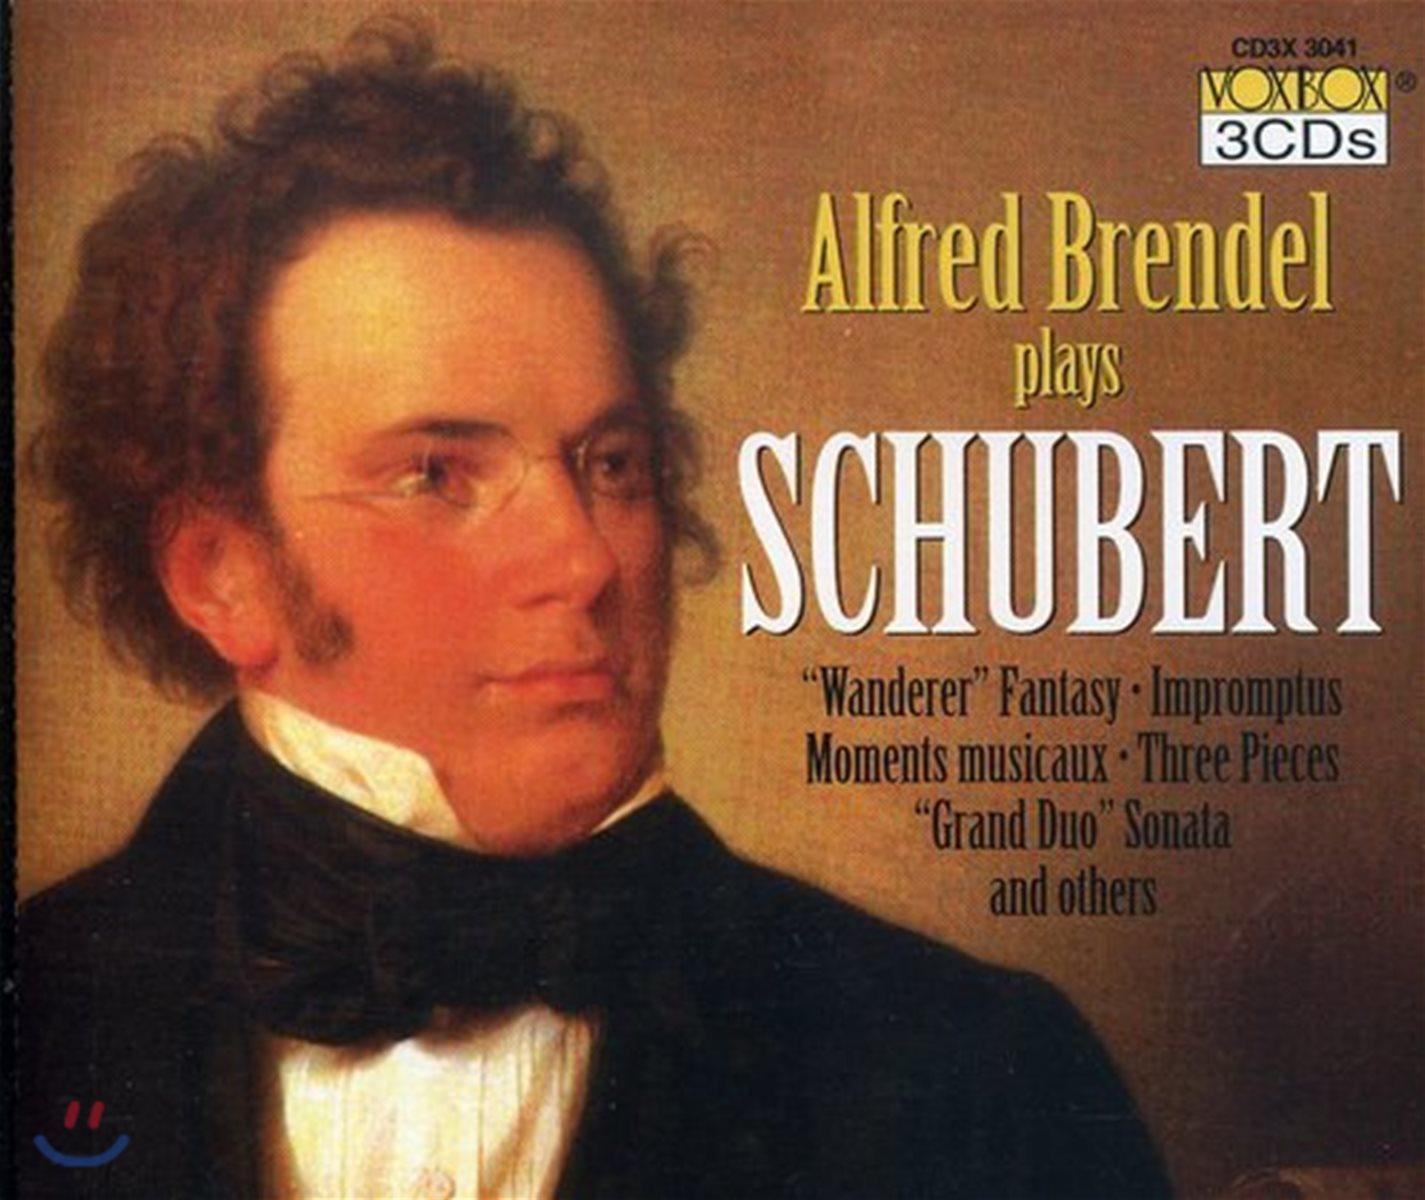 Alfred Brendel 알프레트 브렌델이 연주하는 슈베르트 (Schubert: Wanderer Fantasy, Impromptus)